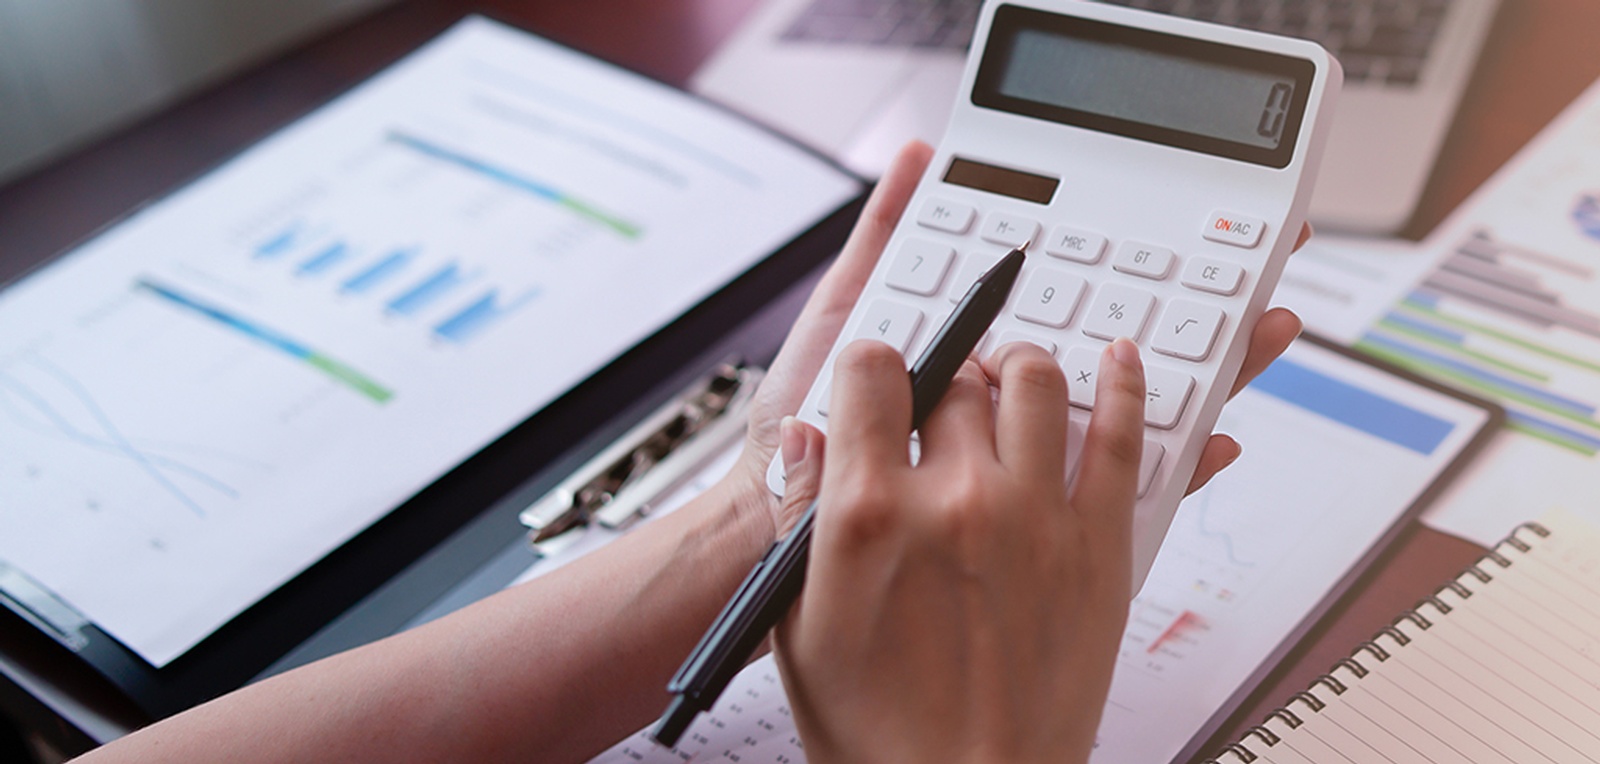 Milton’s Professional Accountants, Tax Preparers & Part-Time CFO